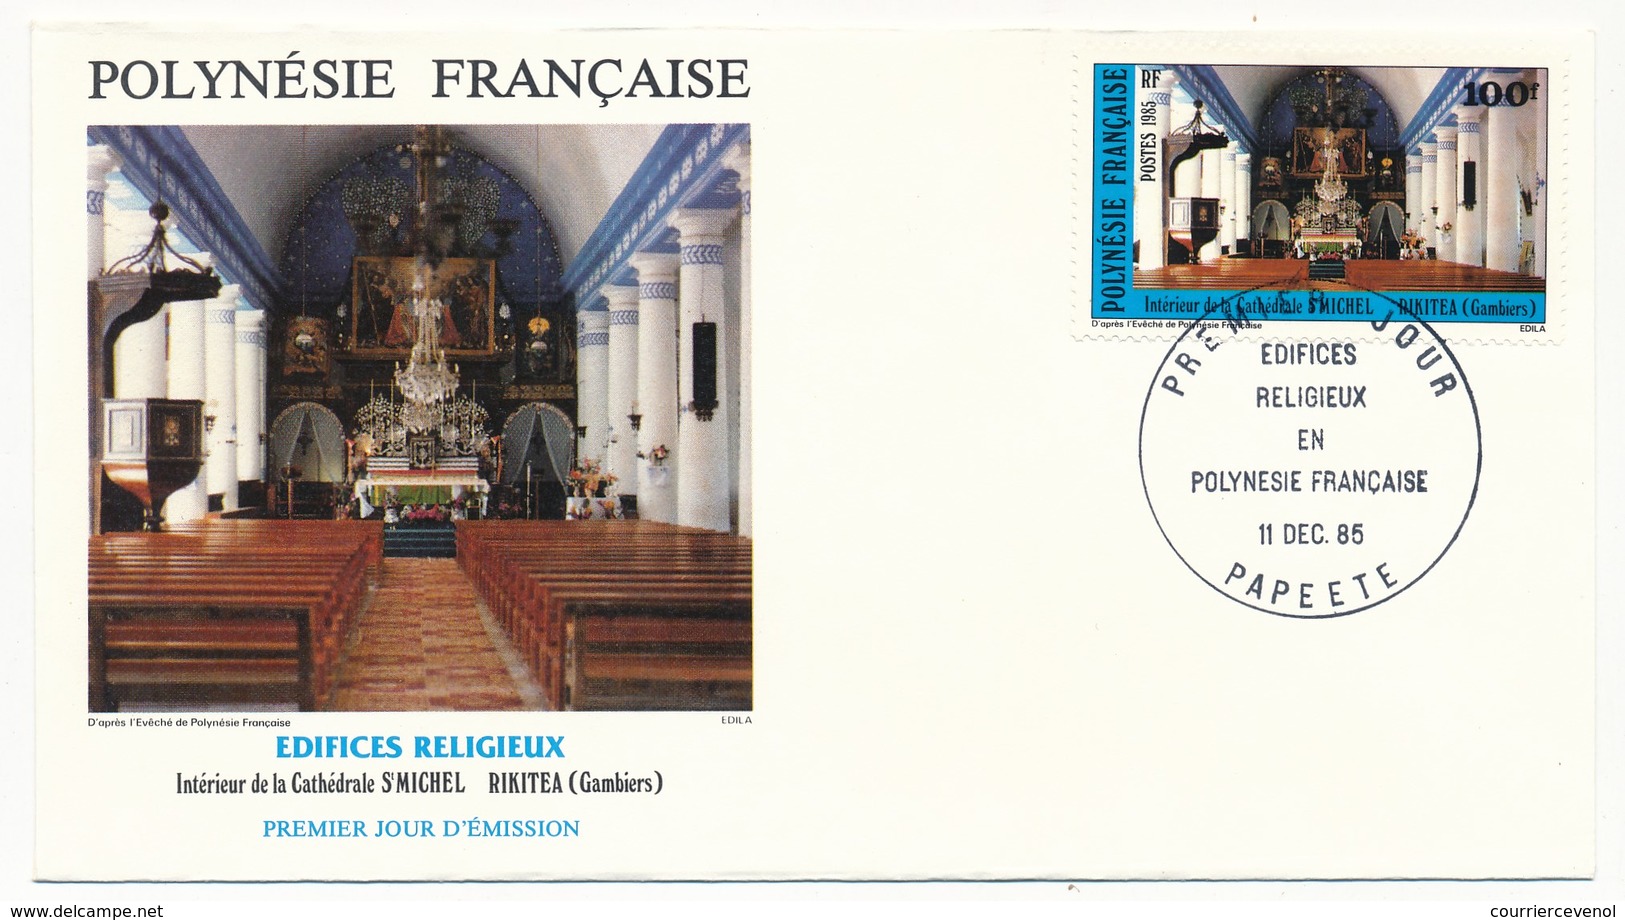 POLYNESIE FRANCAISE - 3 FDC - Edifices Religieux Protestants - 17 Dec 1986 - Papeete - FDC